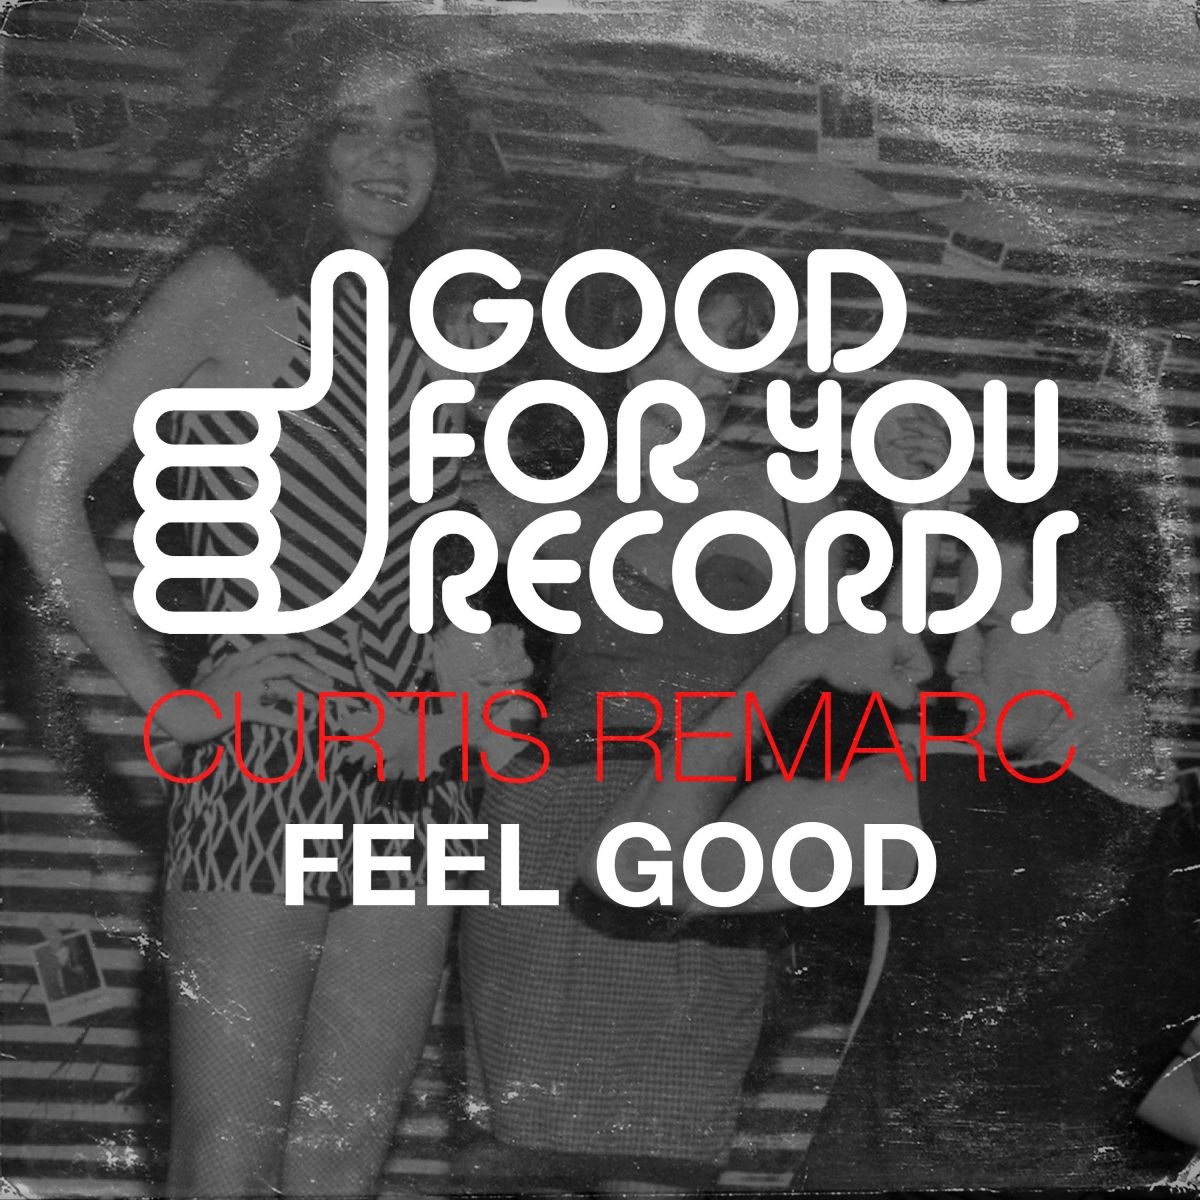 Feel good mixed. Feel good. Feel good альбом. Feeling good оригинал. Feel good надпись.